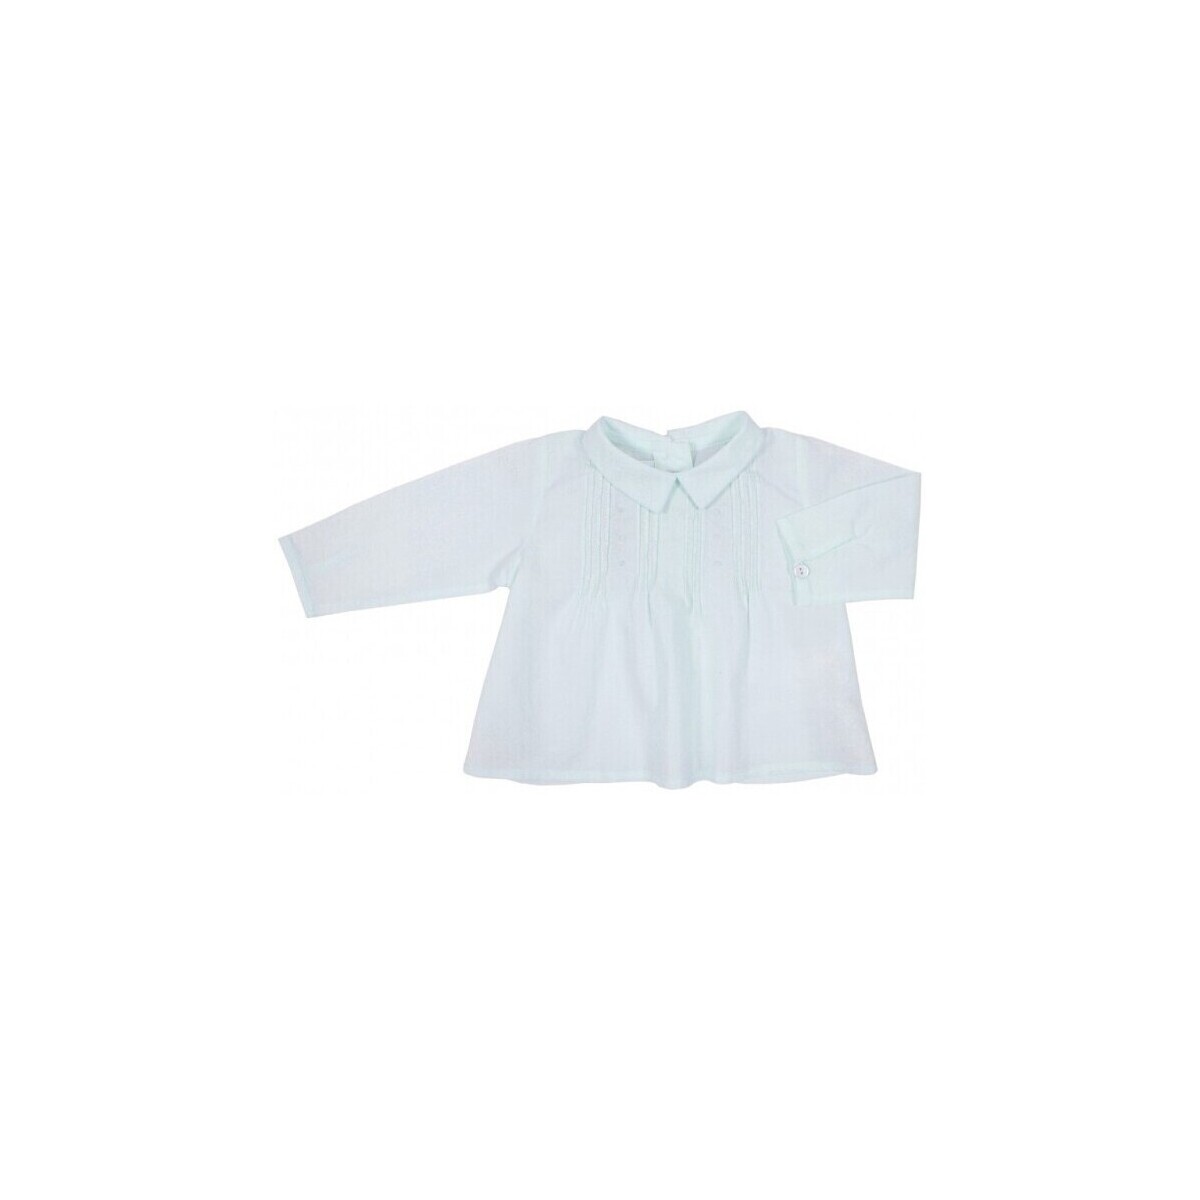 textil Niños Camisas manga larga Bonnet À Pompon 10TO16-12 Azul